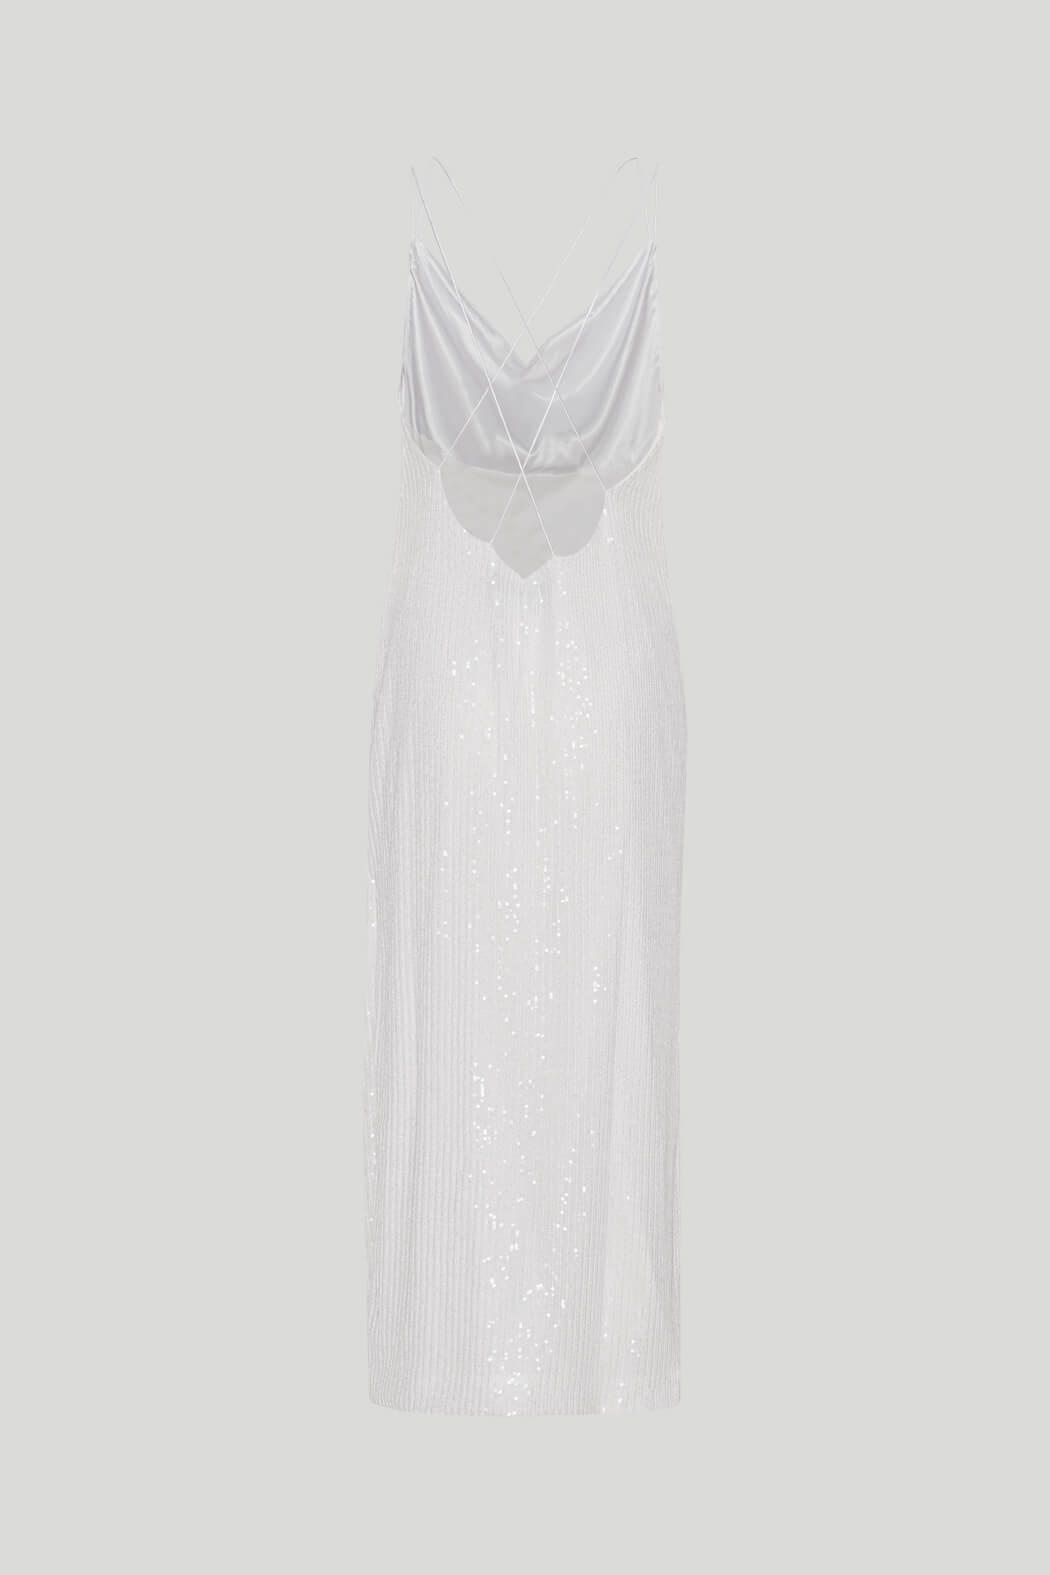 ROTATE Briger Christensen Sequin Slip Dress in Bright White